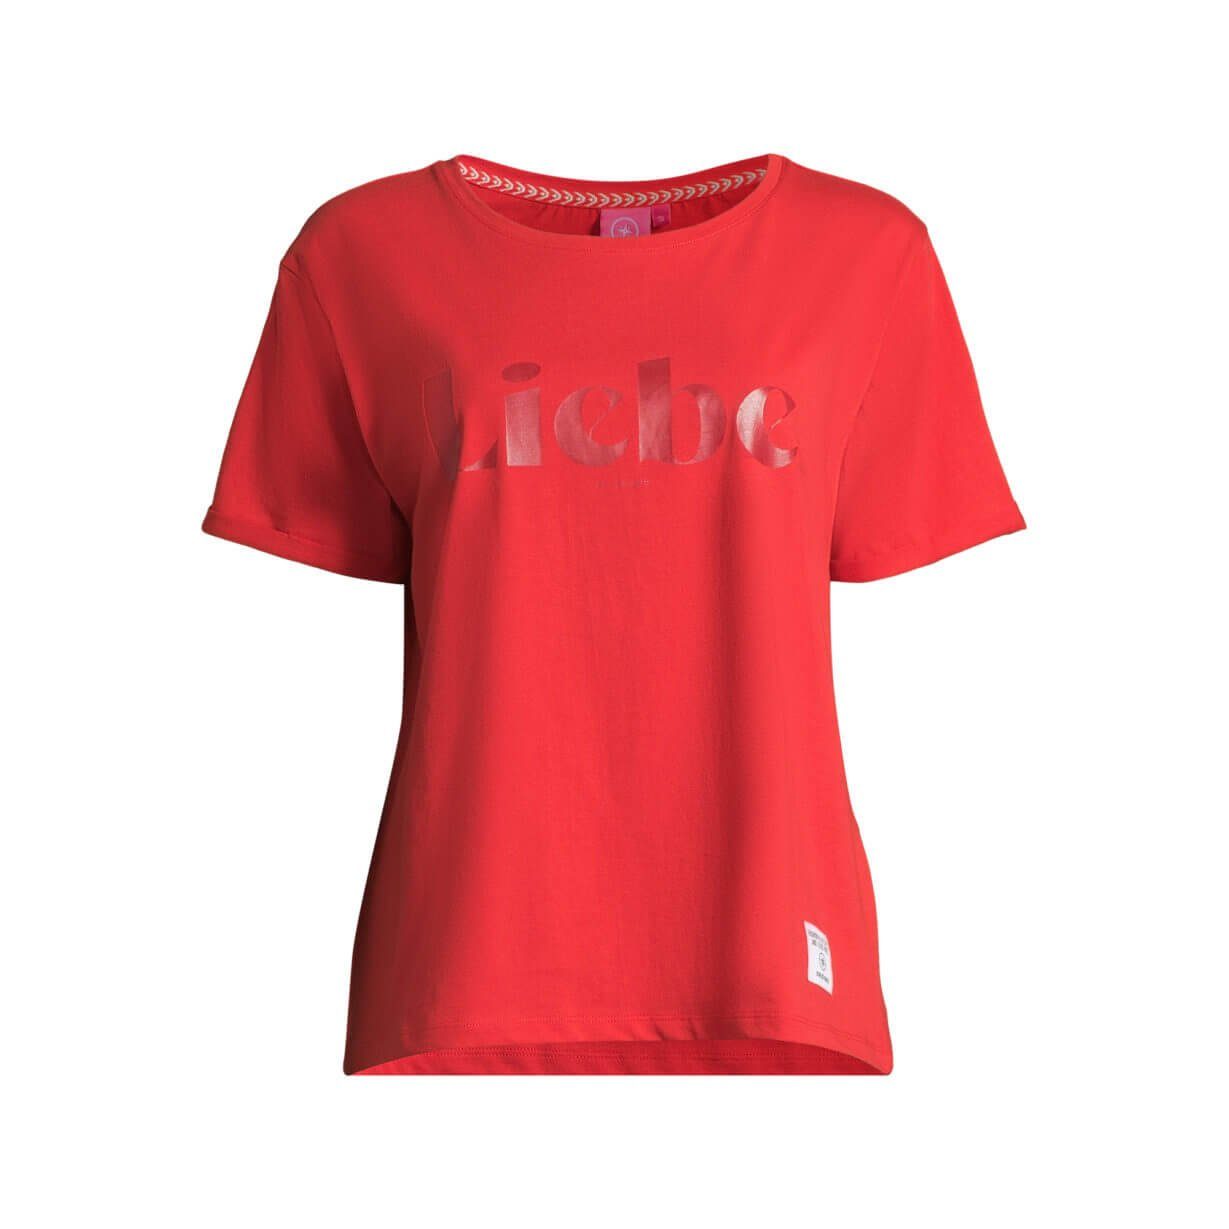 salzhaut T-Shirt Damen Kurzarm-Shirt Moratz mit Front-Beflockung Liebe aus Baumwolle chilli red